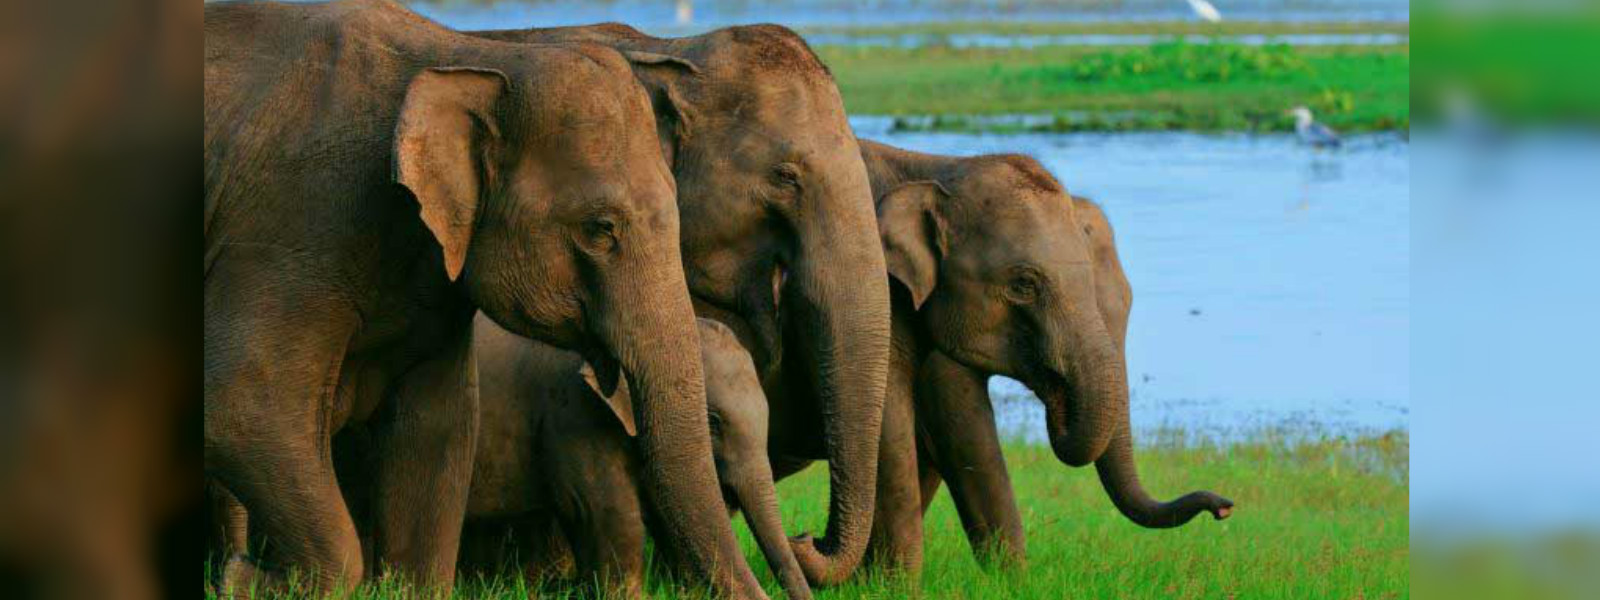 Chasing away Wild Elephants from Balangoda